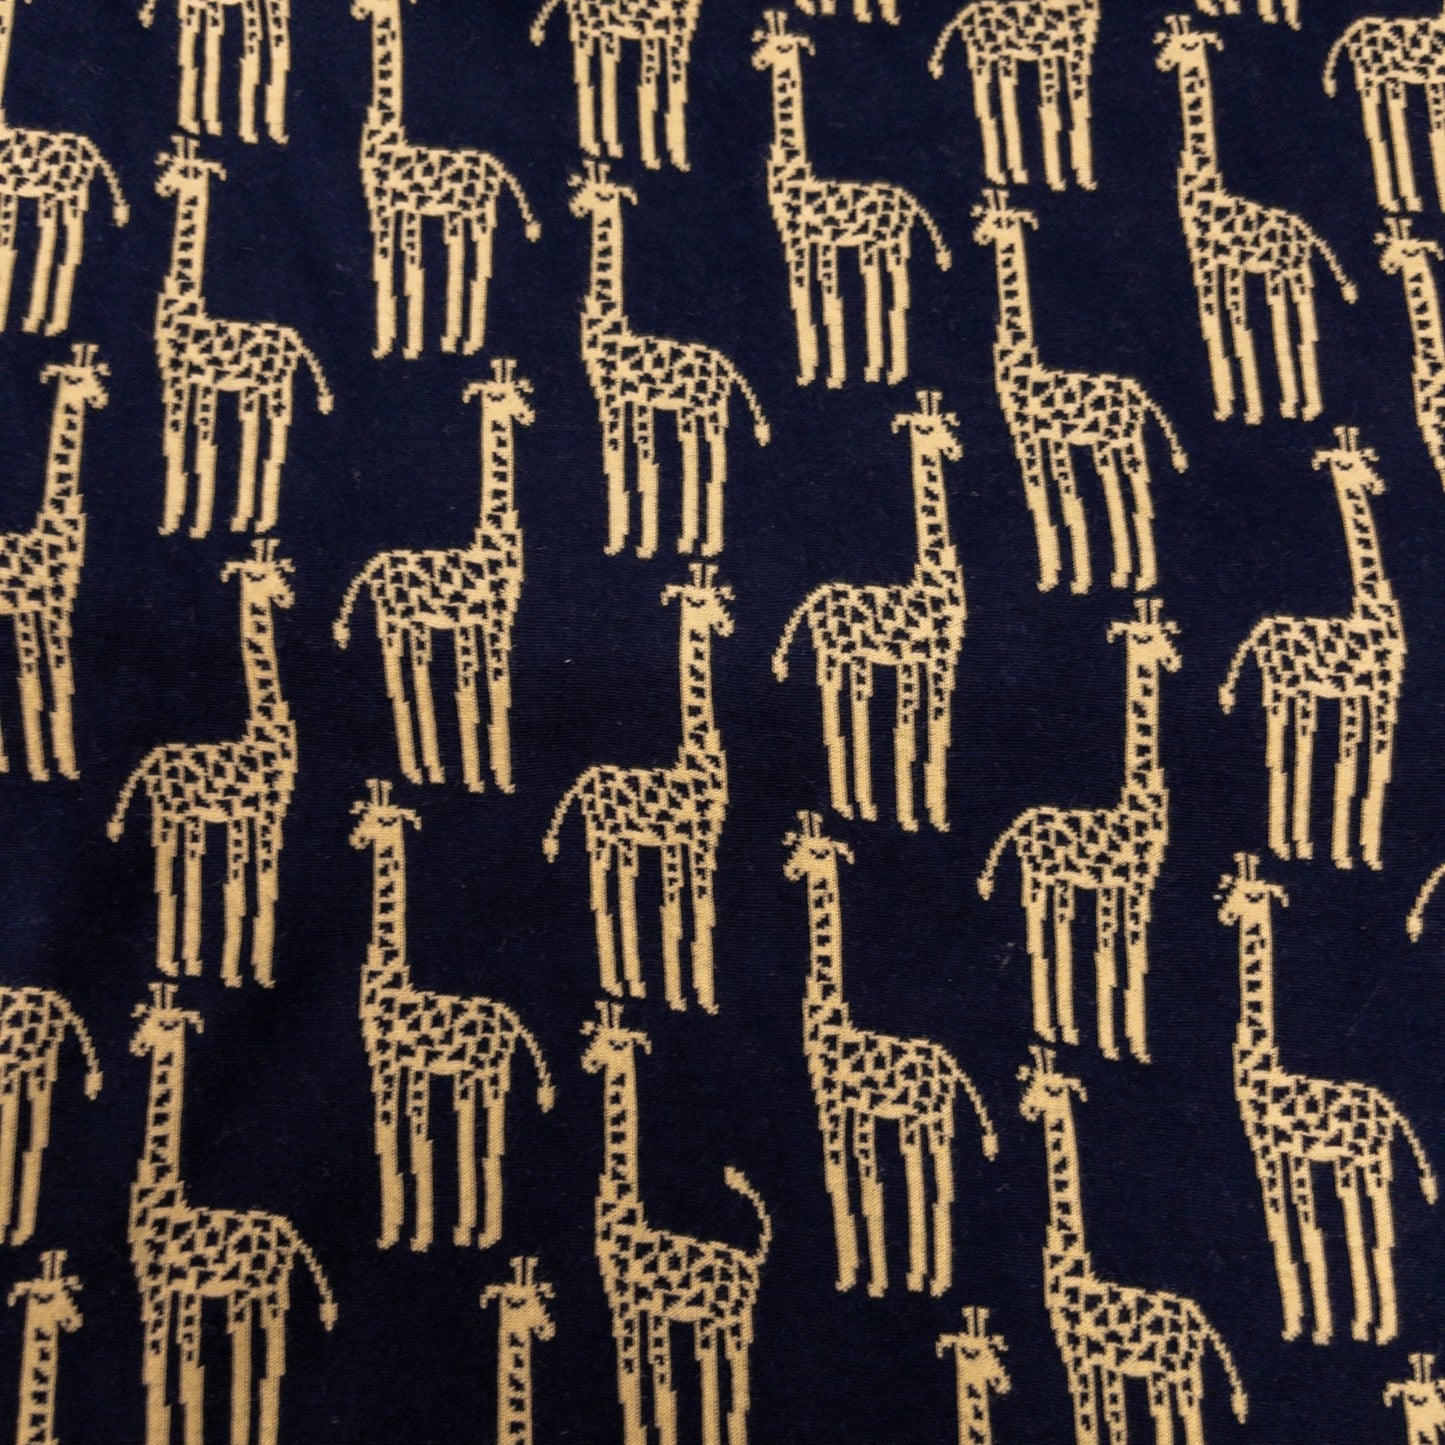 maffon | giraffe navy yellow 長頸鹿 深藍+黃色 | cotton jacquard knit 雙面純棉提花針織 - 160cm